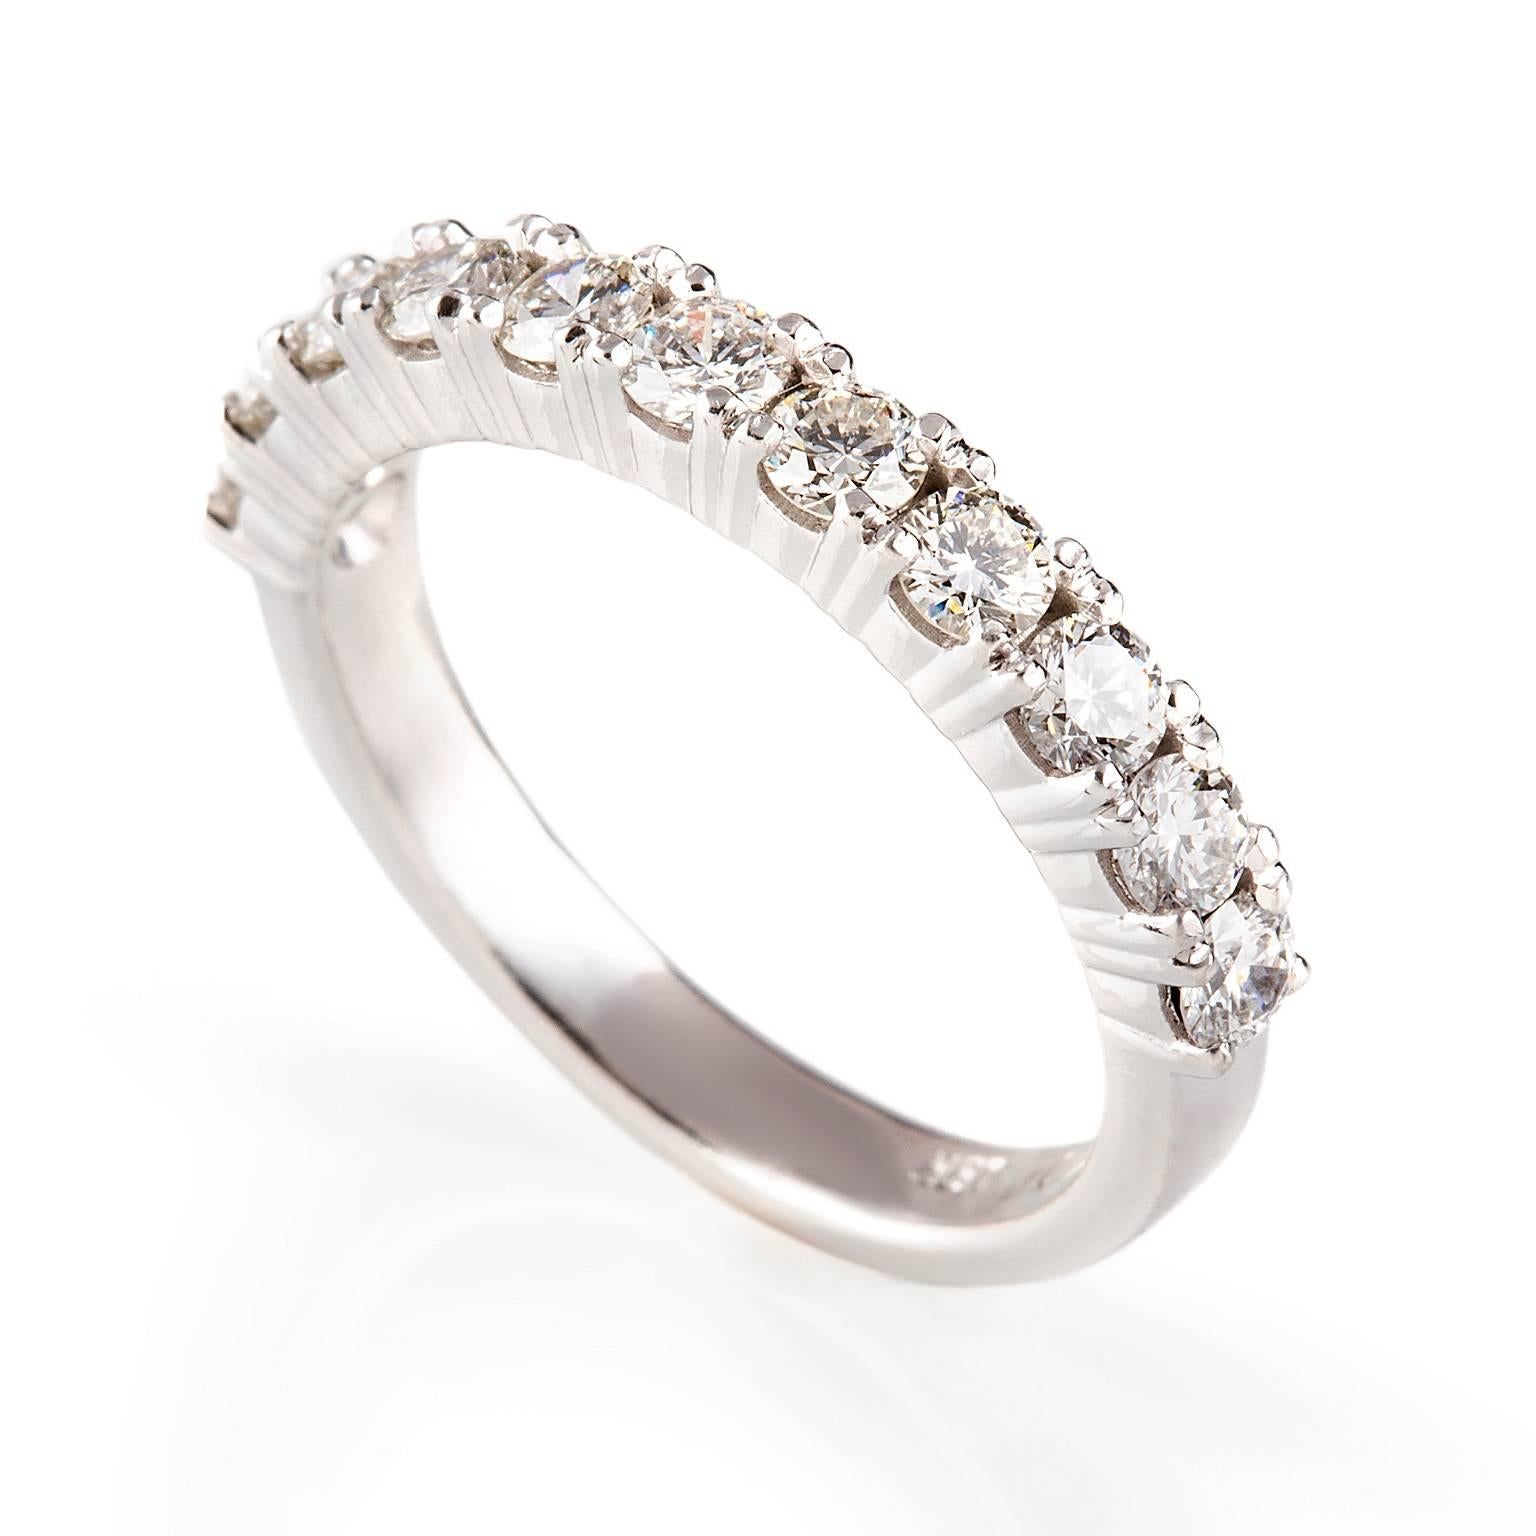 Modern 1.05 Carat Round Brilliant Cut Diamond Bridal Ring in 18 Carat White Gold